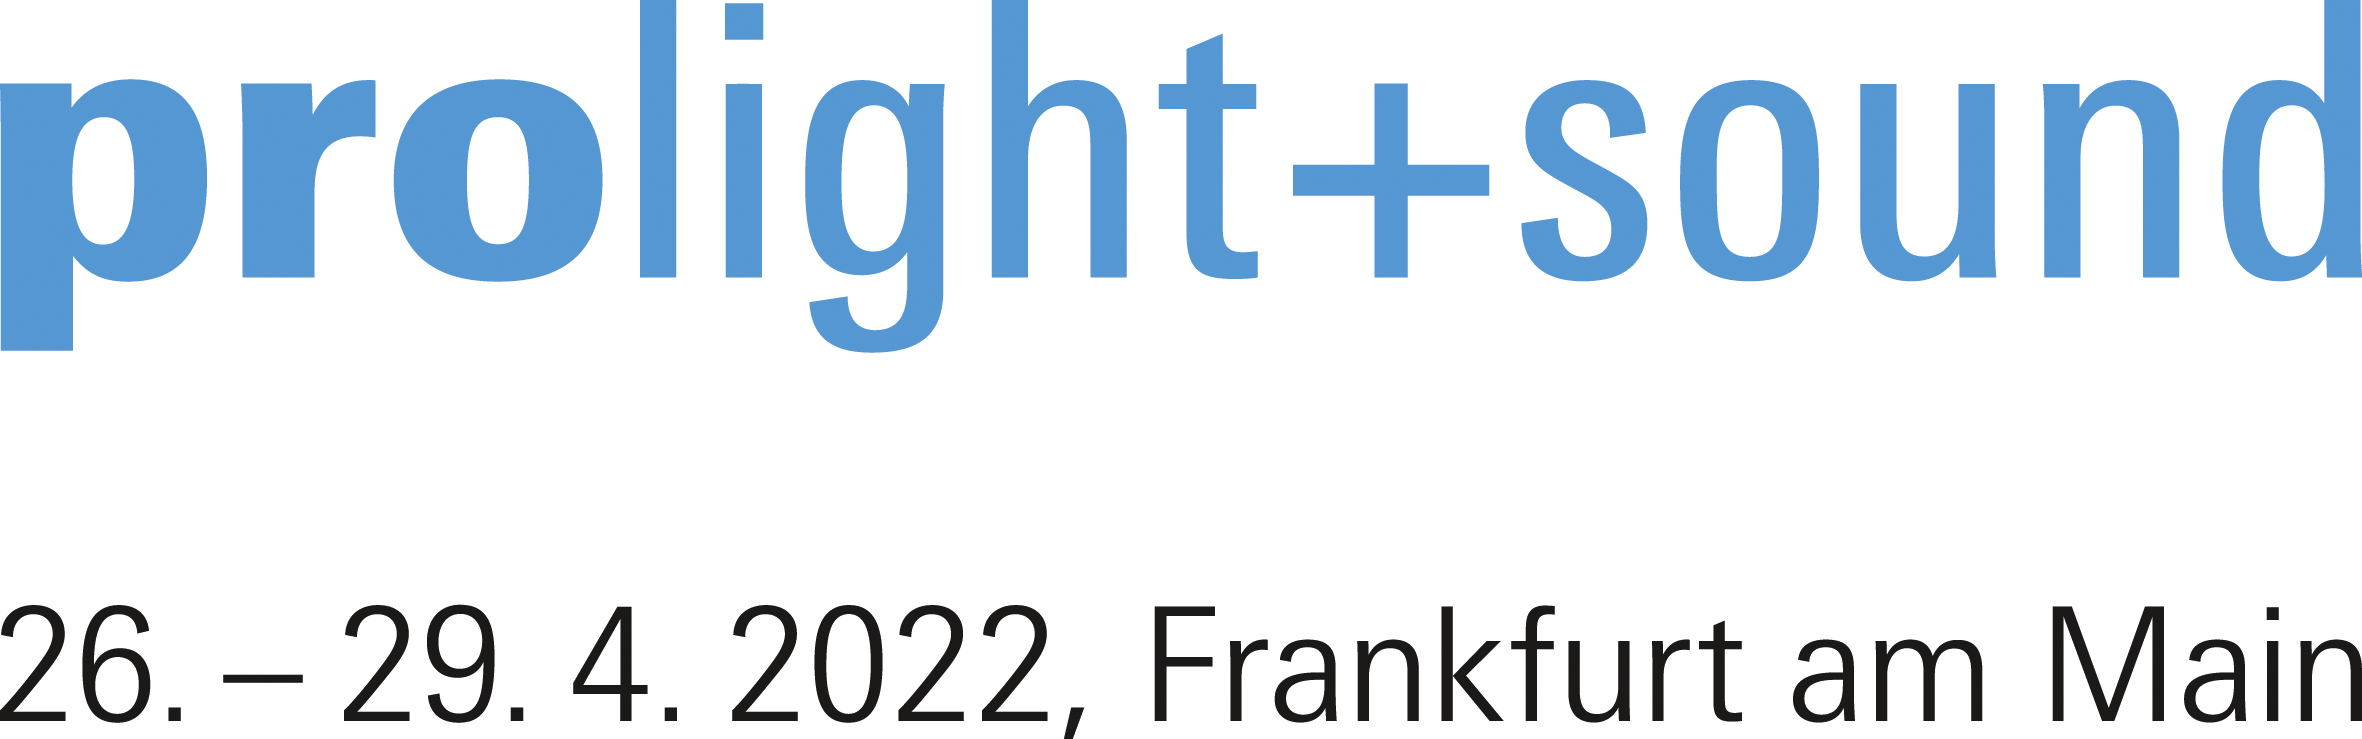 Prolight + Sound Logo With Date 2022 4c